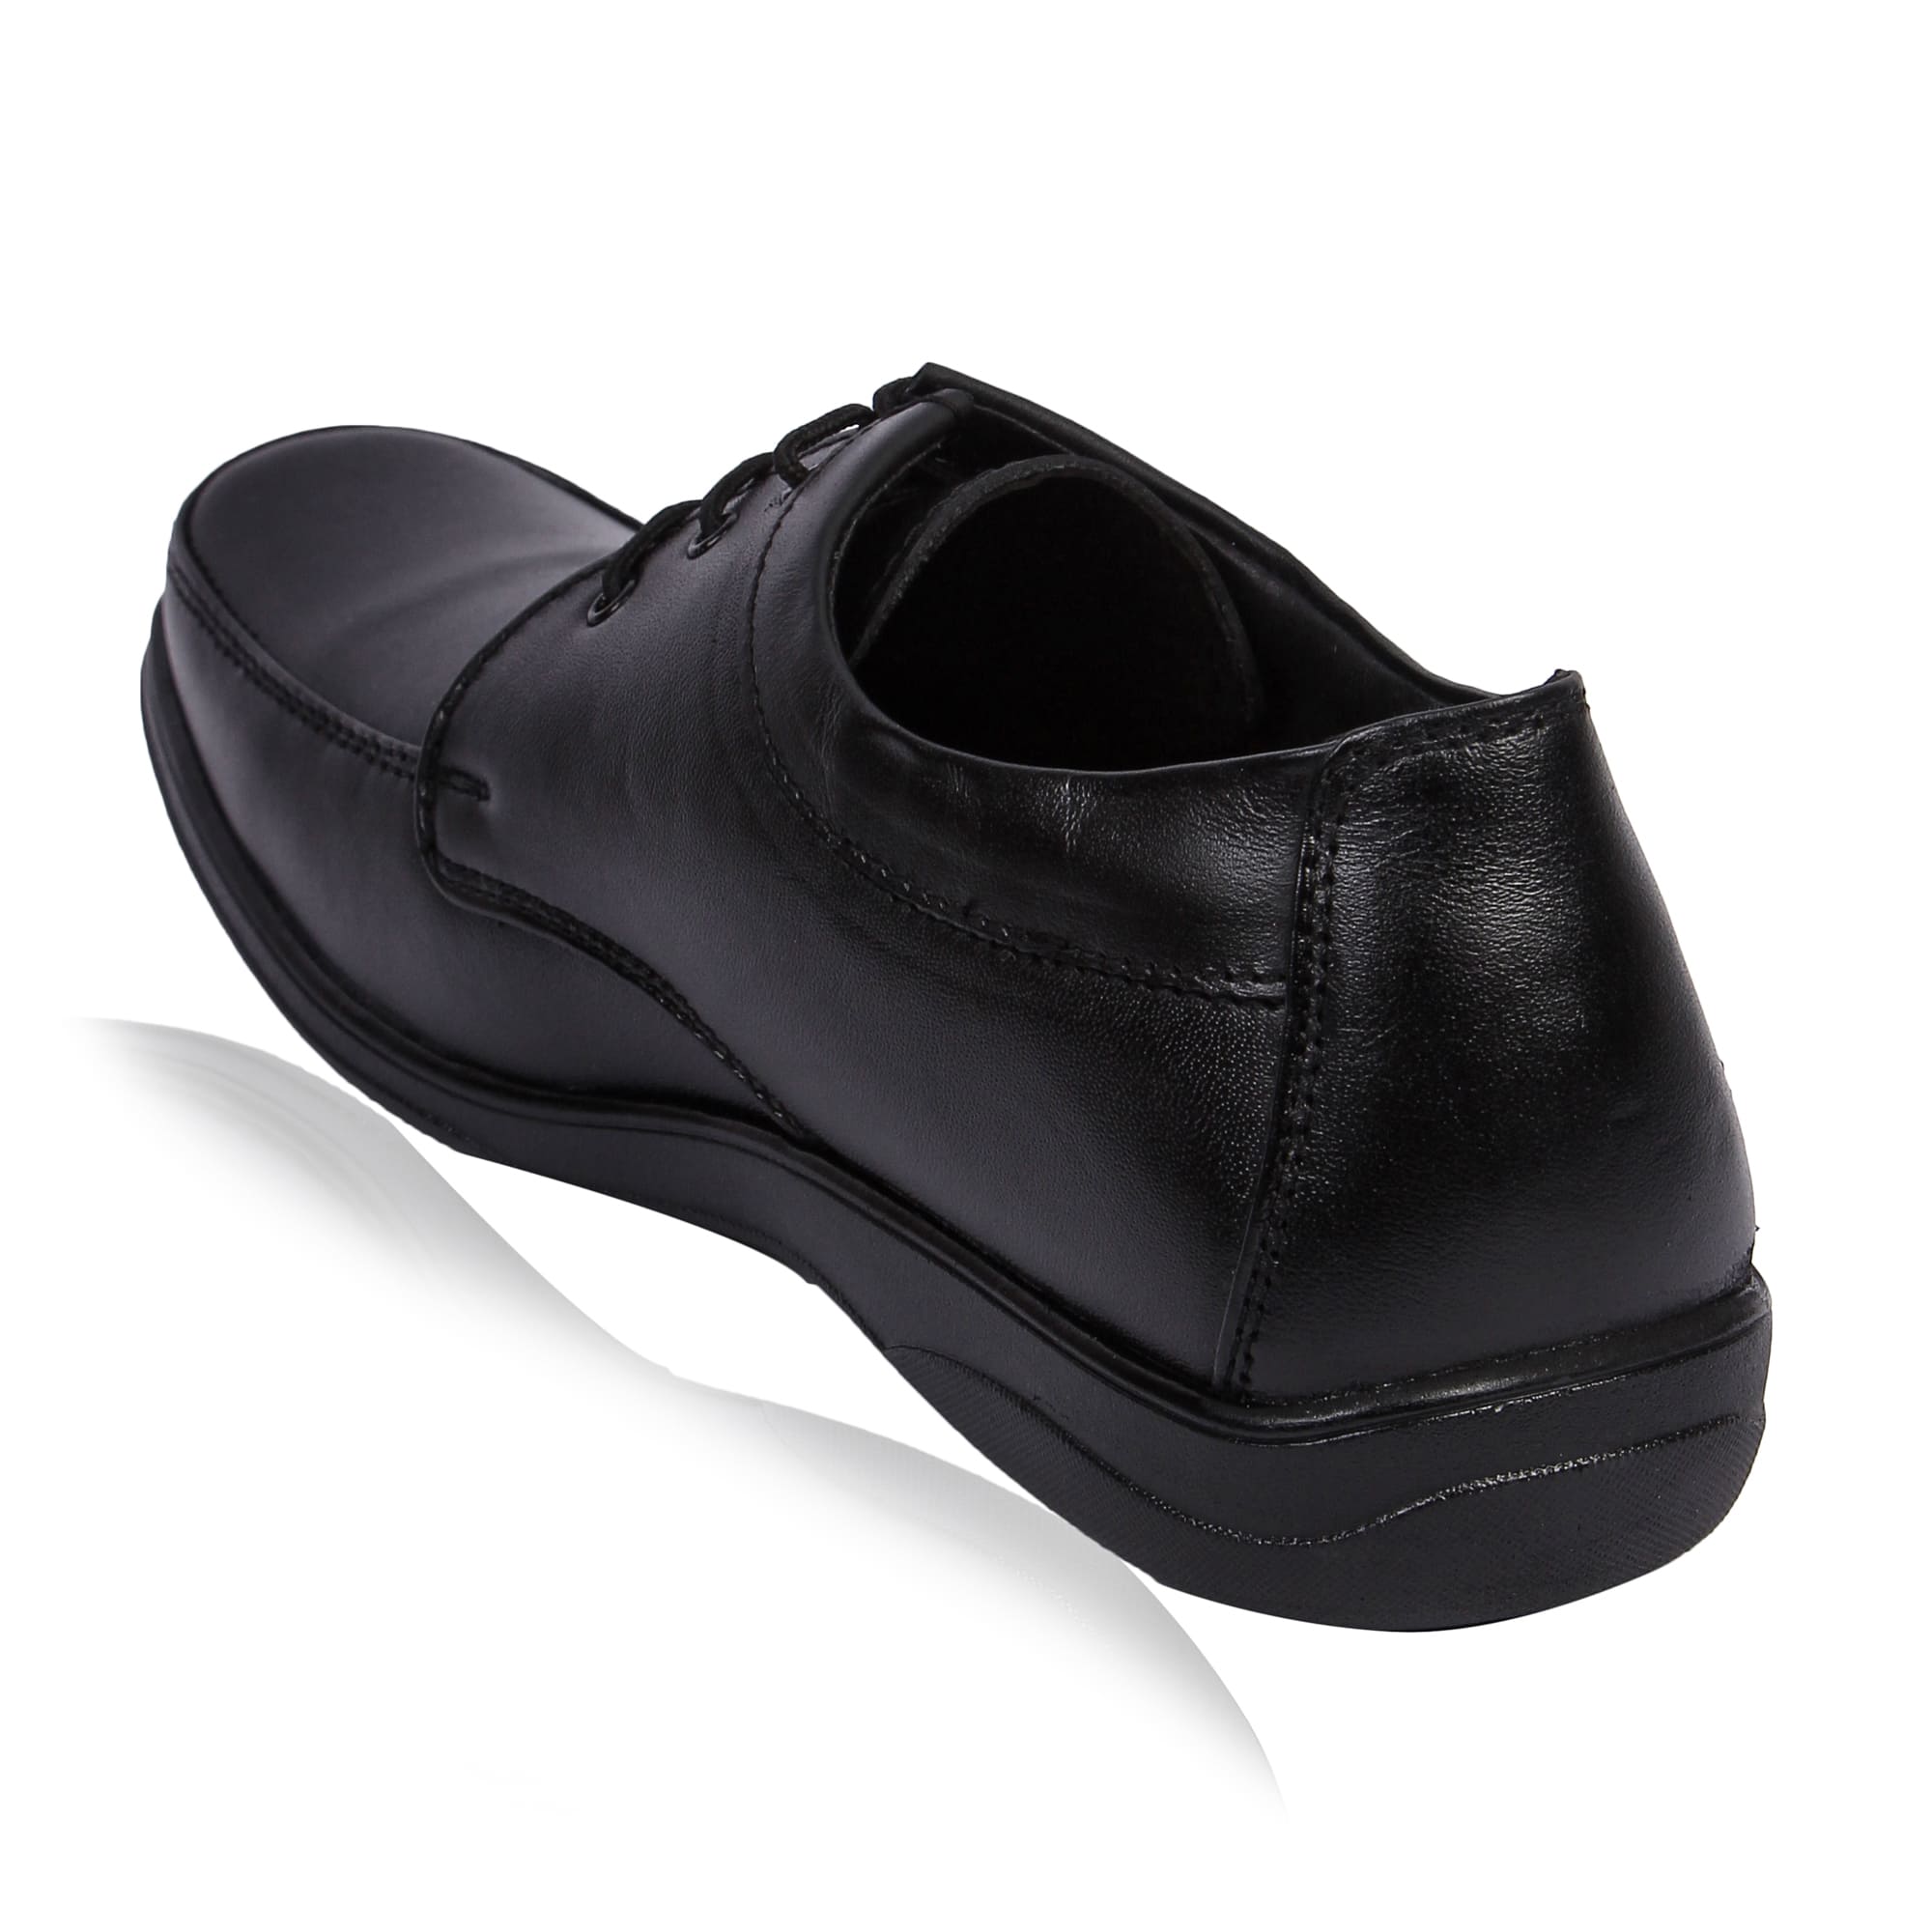 IMG_1634 | Online Store for Men Footwear in India